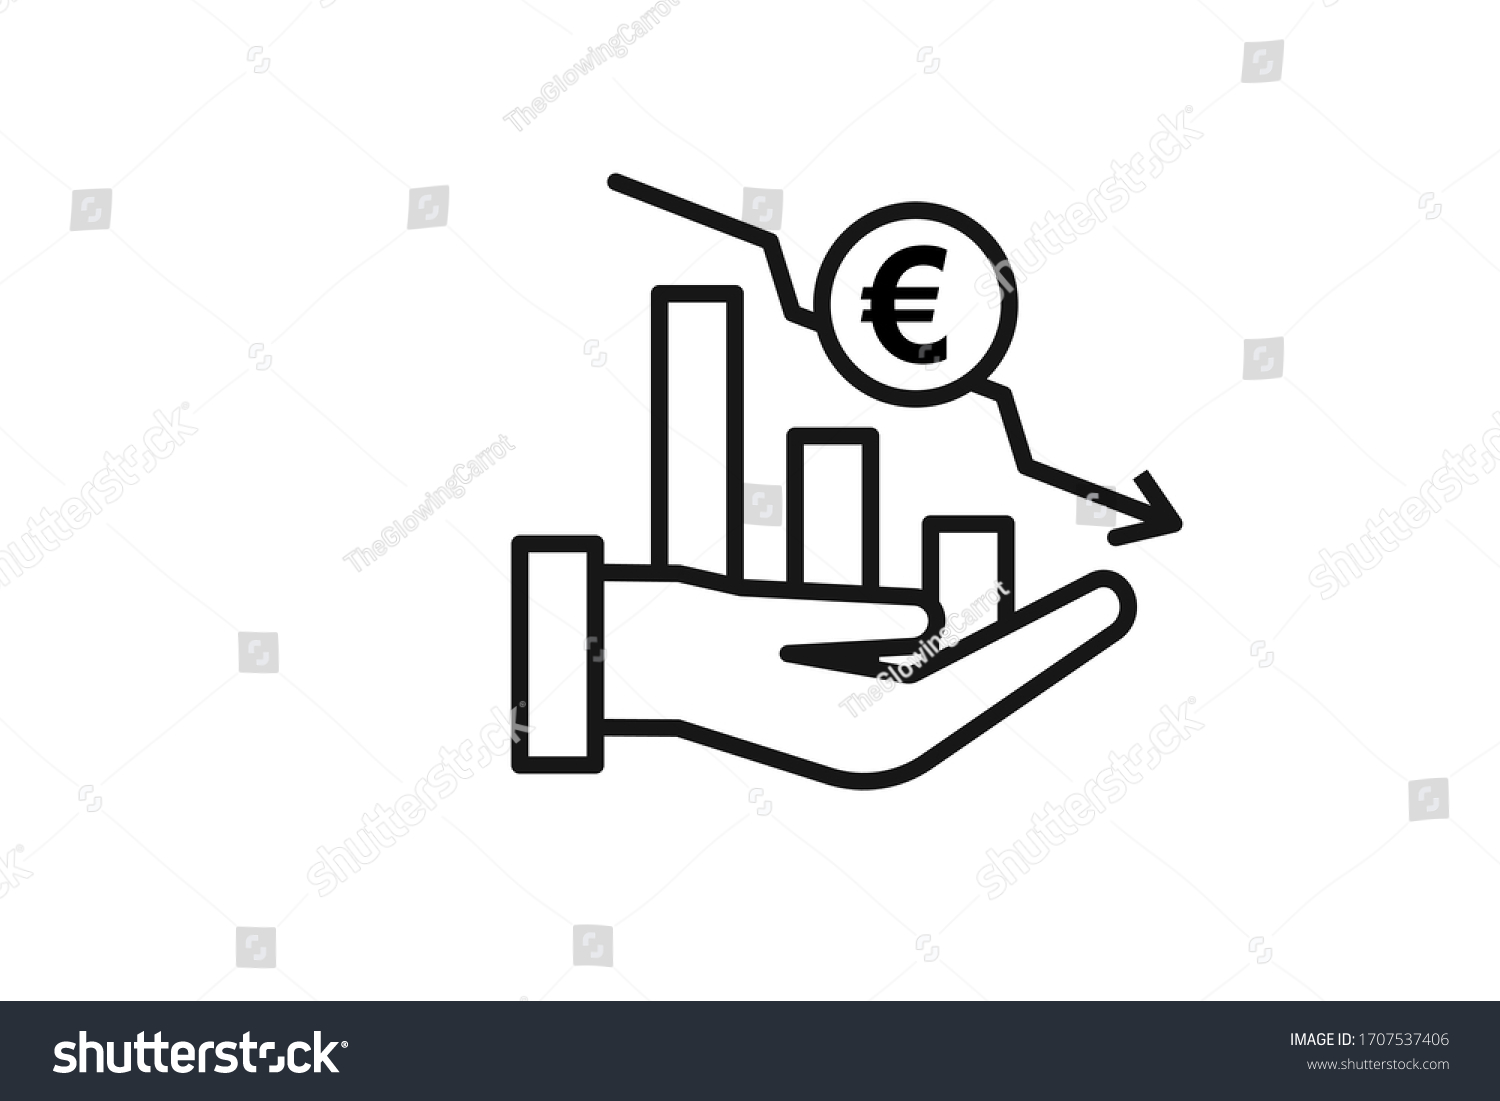 SVG of Icon representing Euro currency depreciation. svg